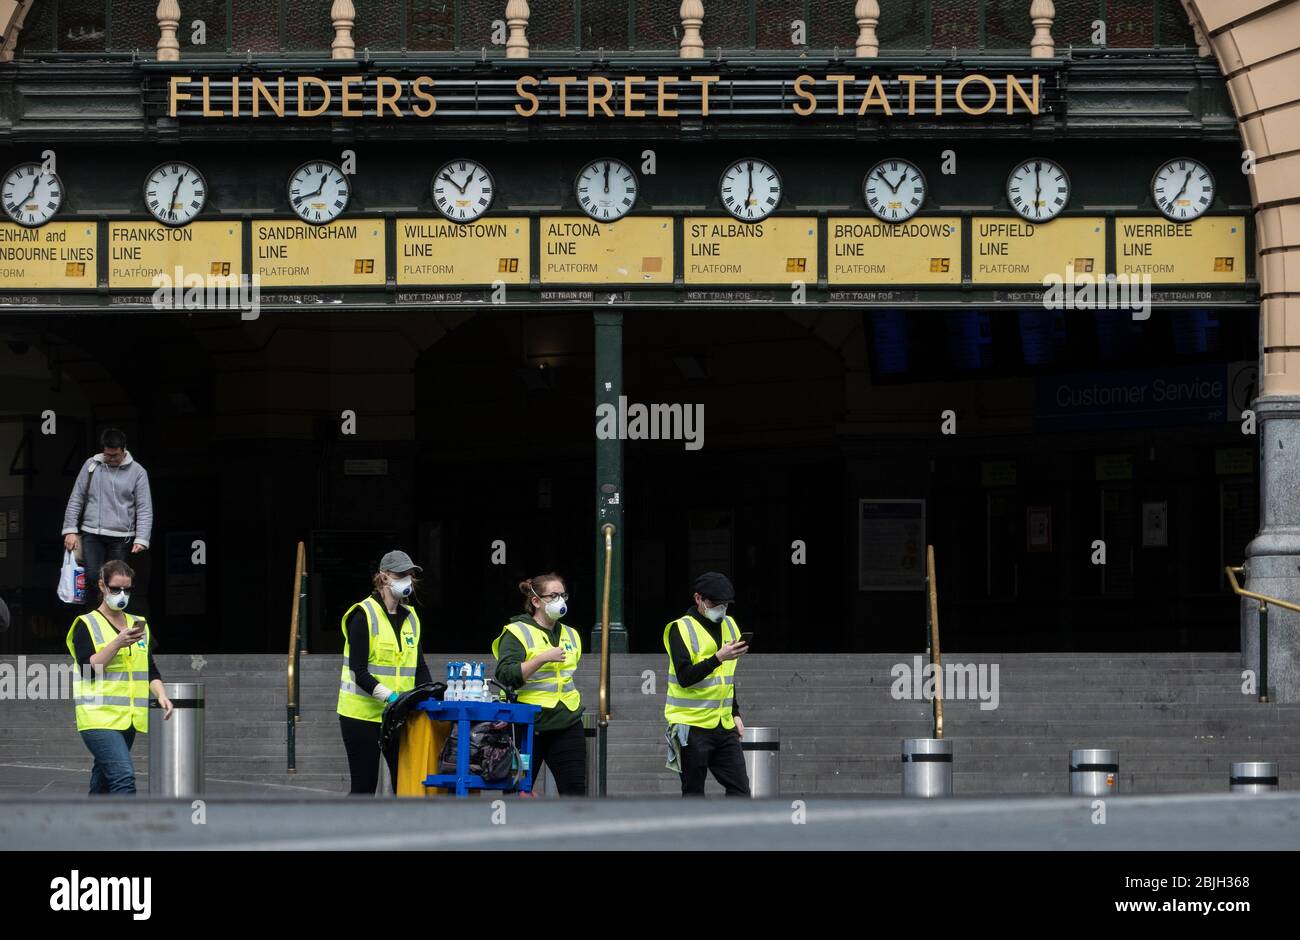 Covid-19 pandemic Melbourne Australia 2020. Scenes on the streets  during the coronavirus lockdown in Melbourne Australia. Stock Photo